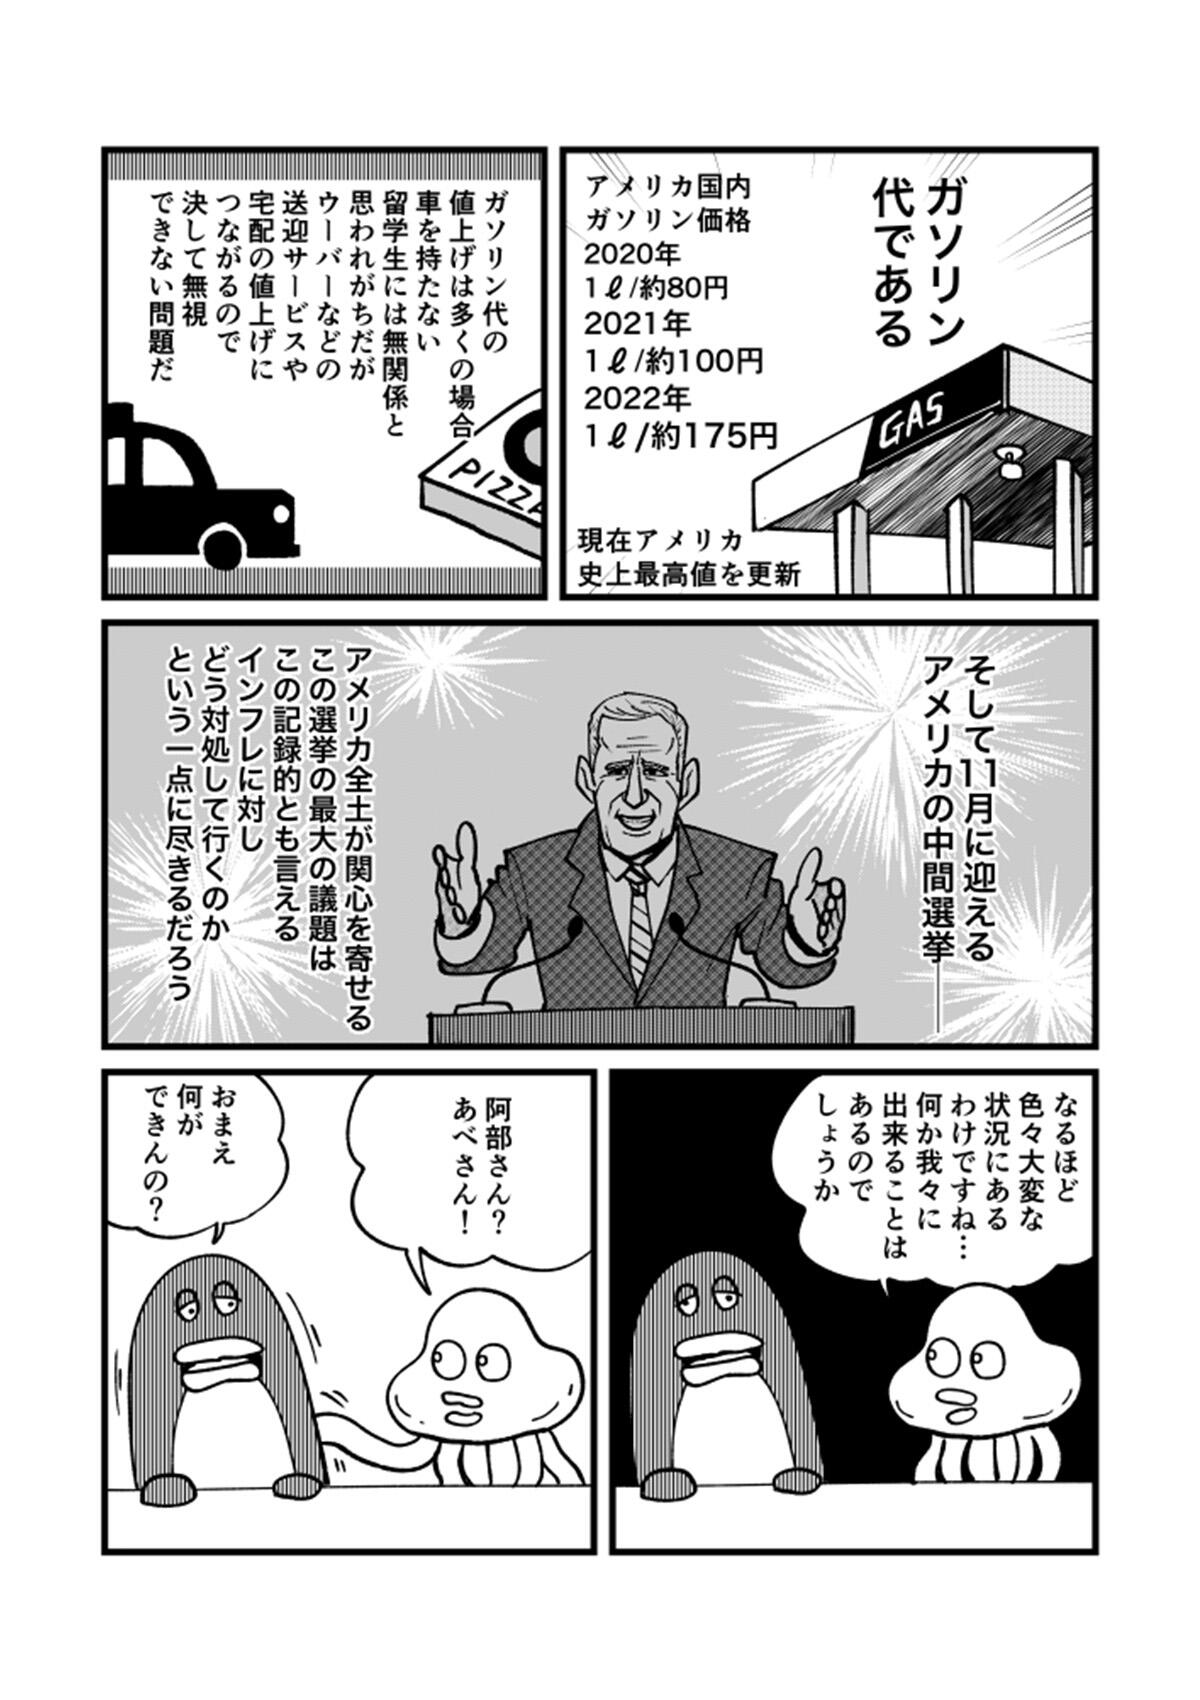 https://www.ryugaku.co.jp/column/images/jawamura15_4_1200.jpg